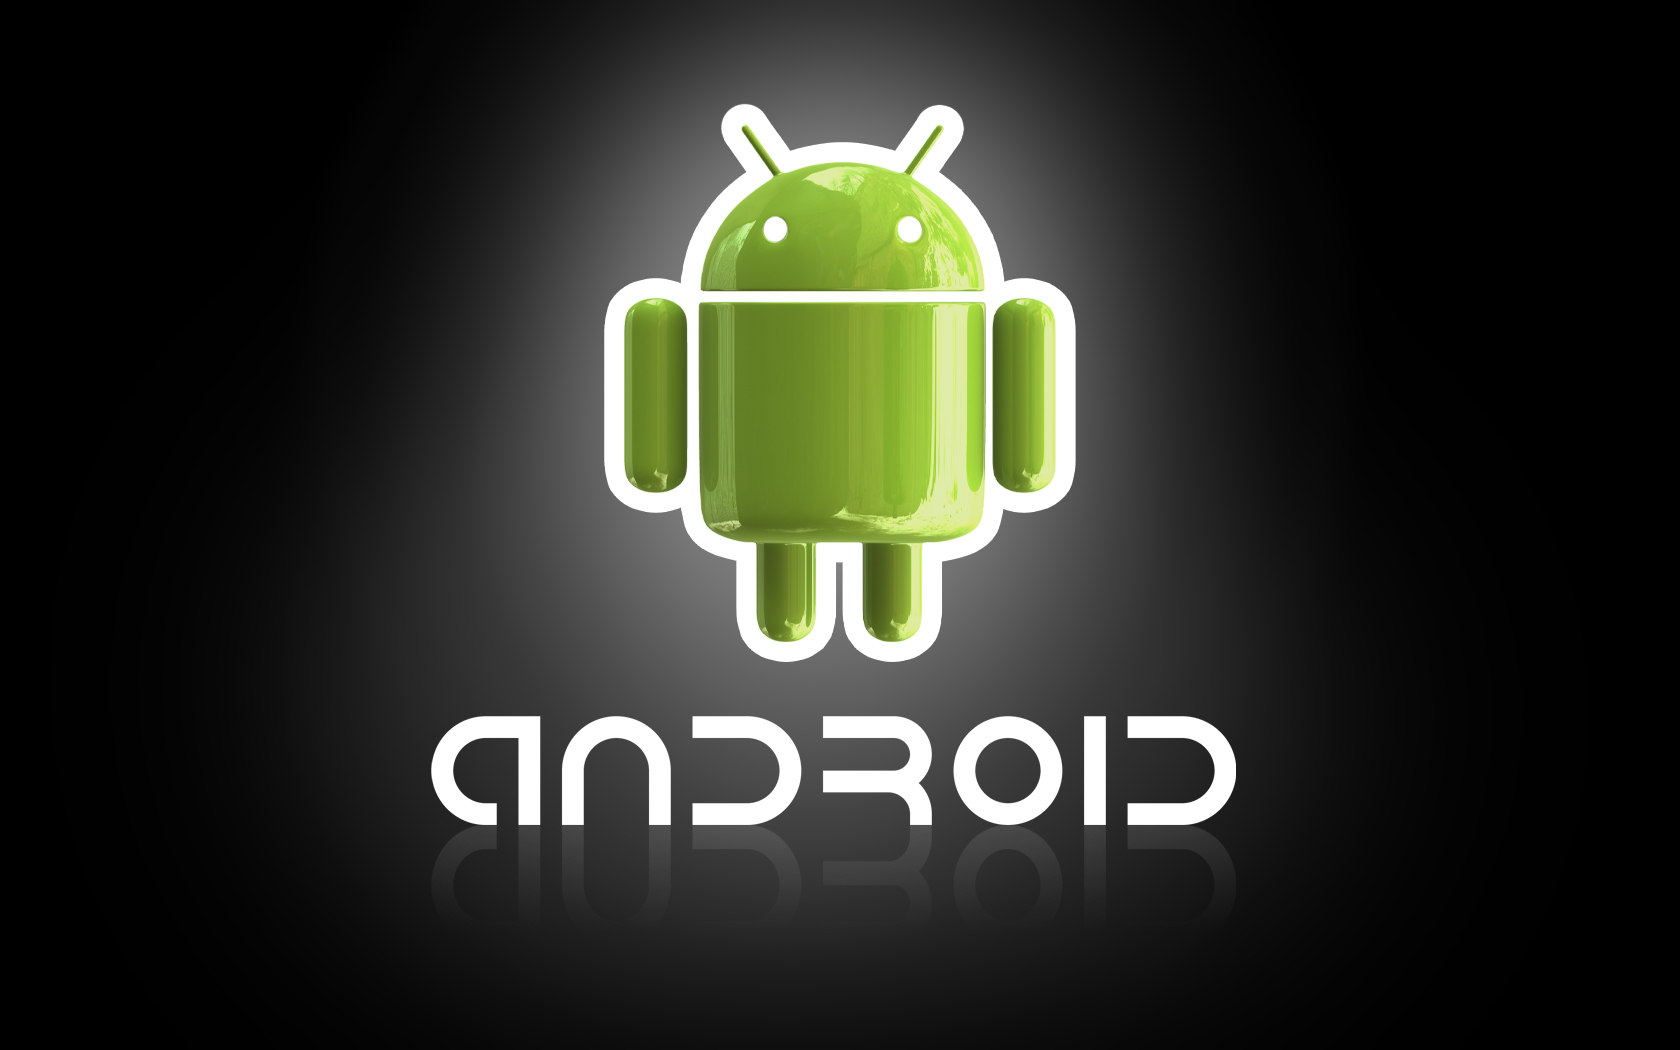 Android extension. Андроид. Логотип андроид. Платформа андроид. Операционная система андроид.